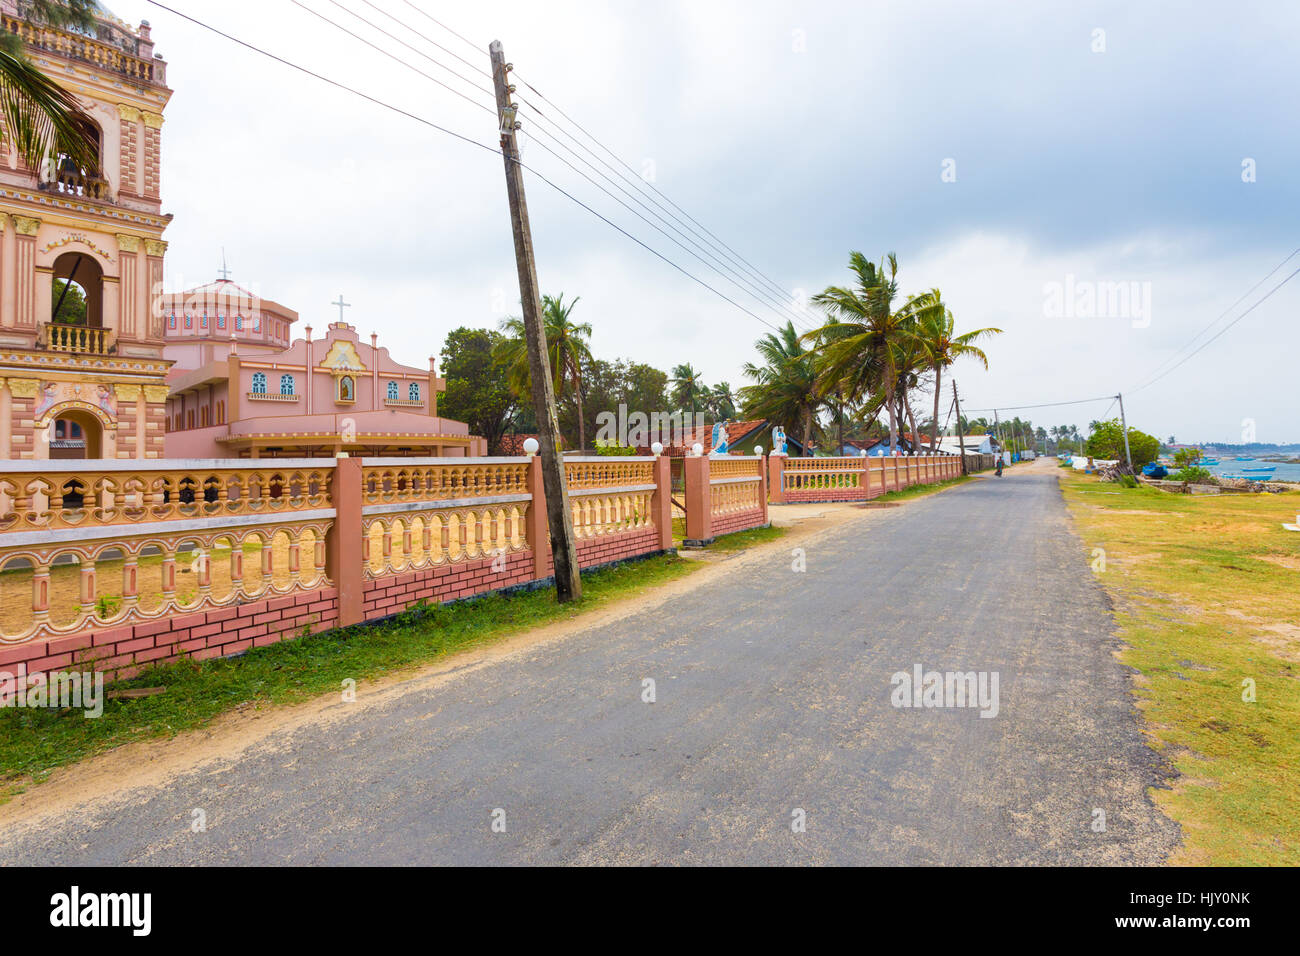 St. Thomas Church situated on the coast along a coastal road in Point Pedro, Jaffna, Sri Lanka Stock Photo